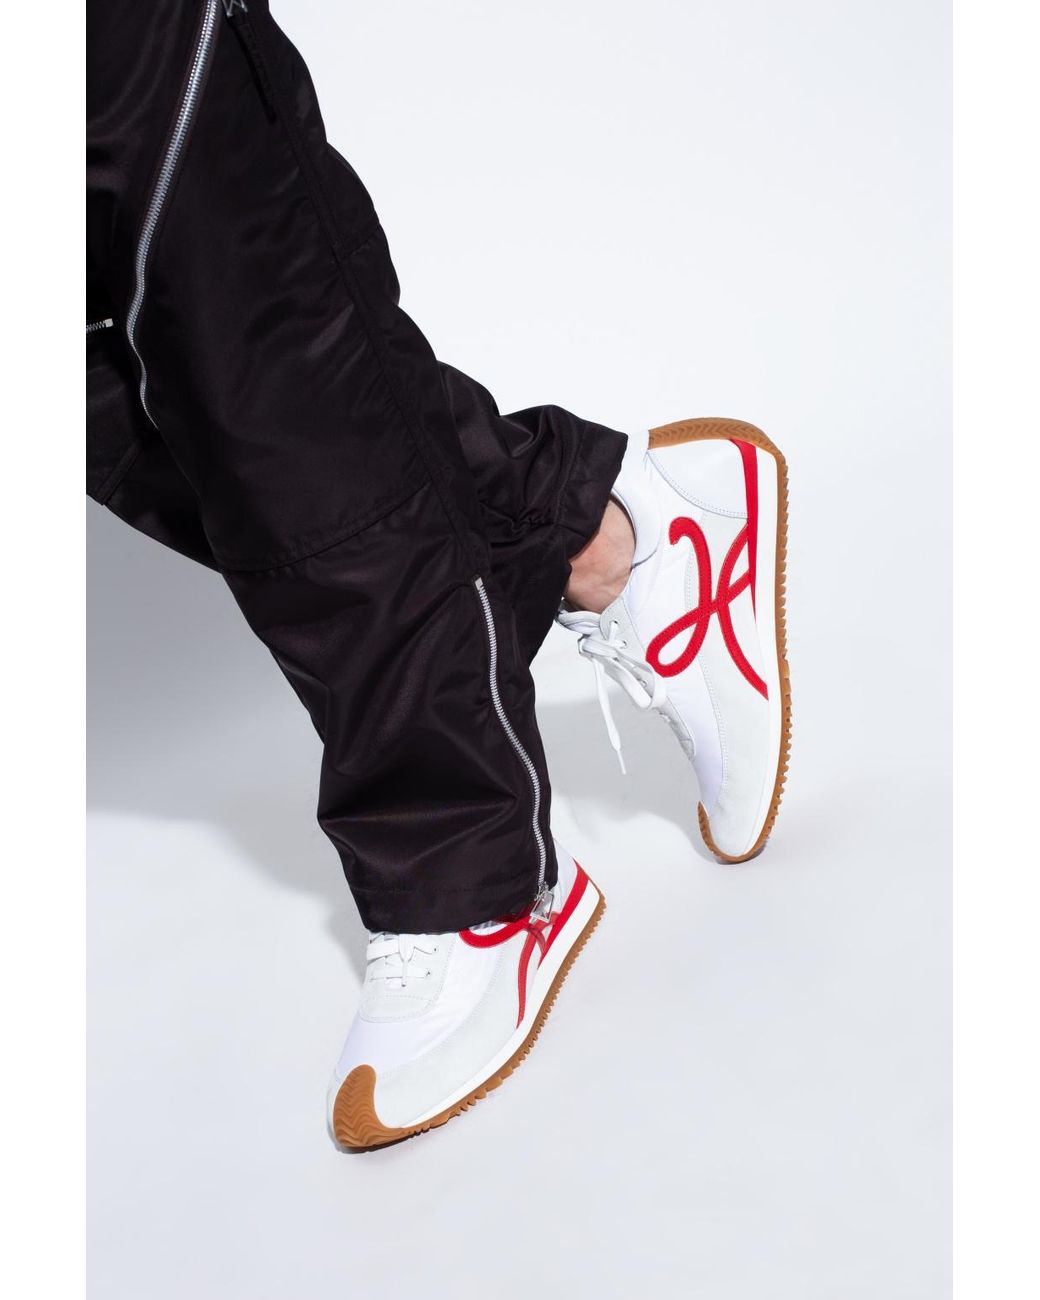 Loewe Leather 'flow Runner' Sneakers in White for Men - Lyst